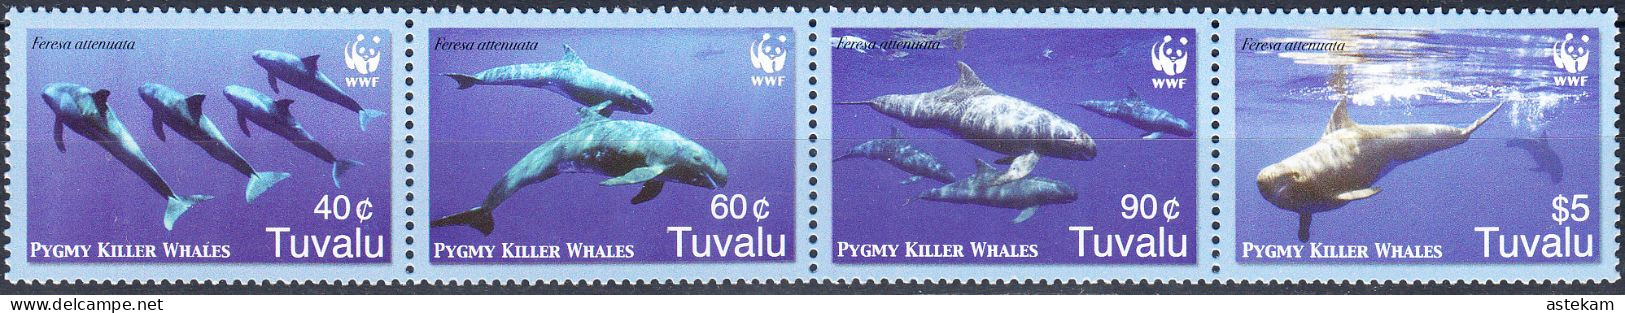 TUVALU 2006, MARINE FAUNA, WWF, DWARF GRIND WHALES, COMPLETE MNH SERIES With GOOD QUALITY, *** - Tuvalu